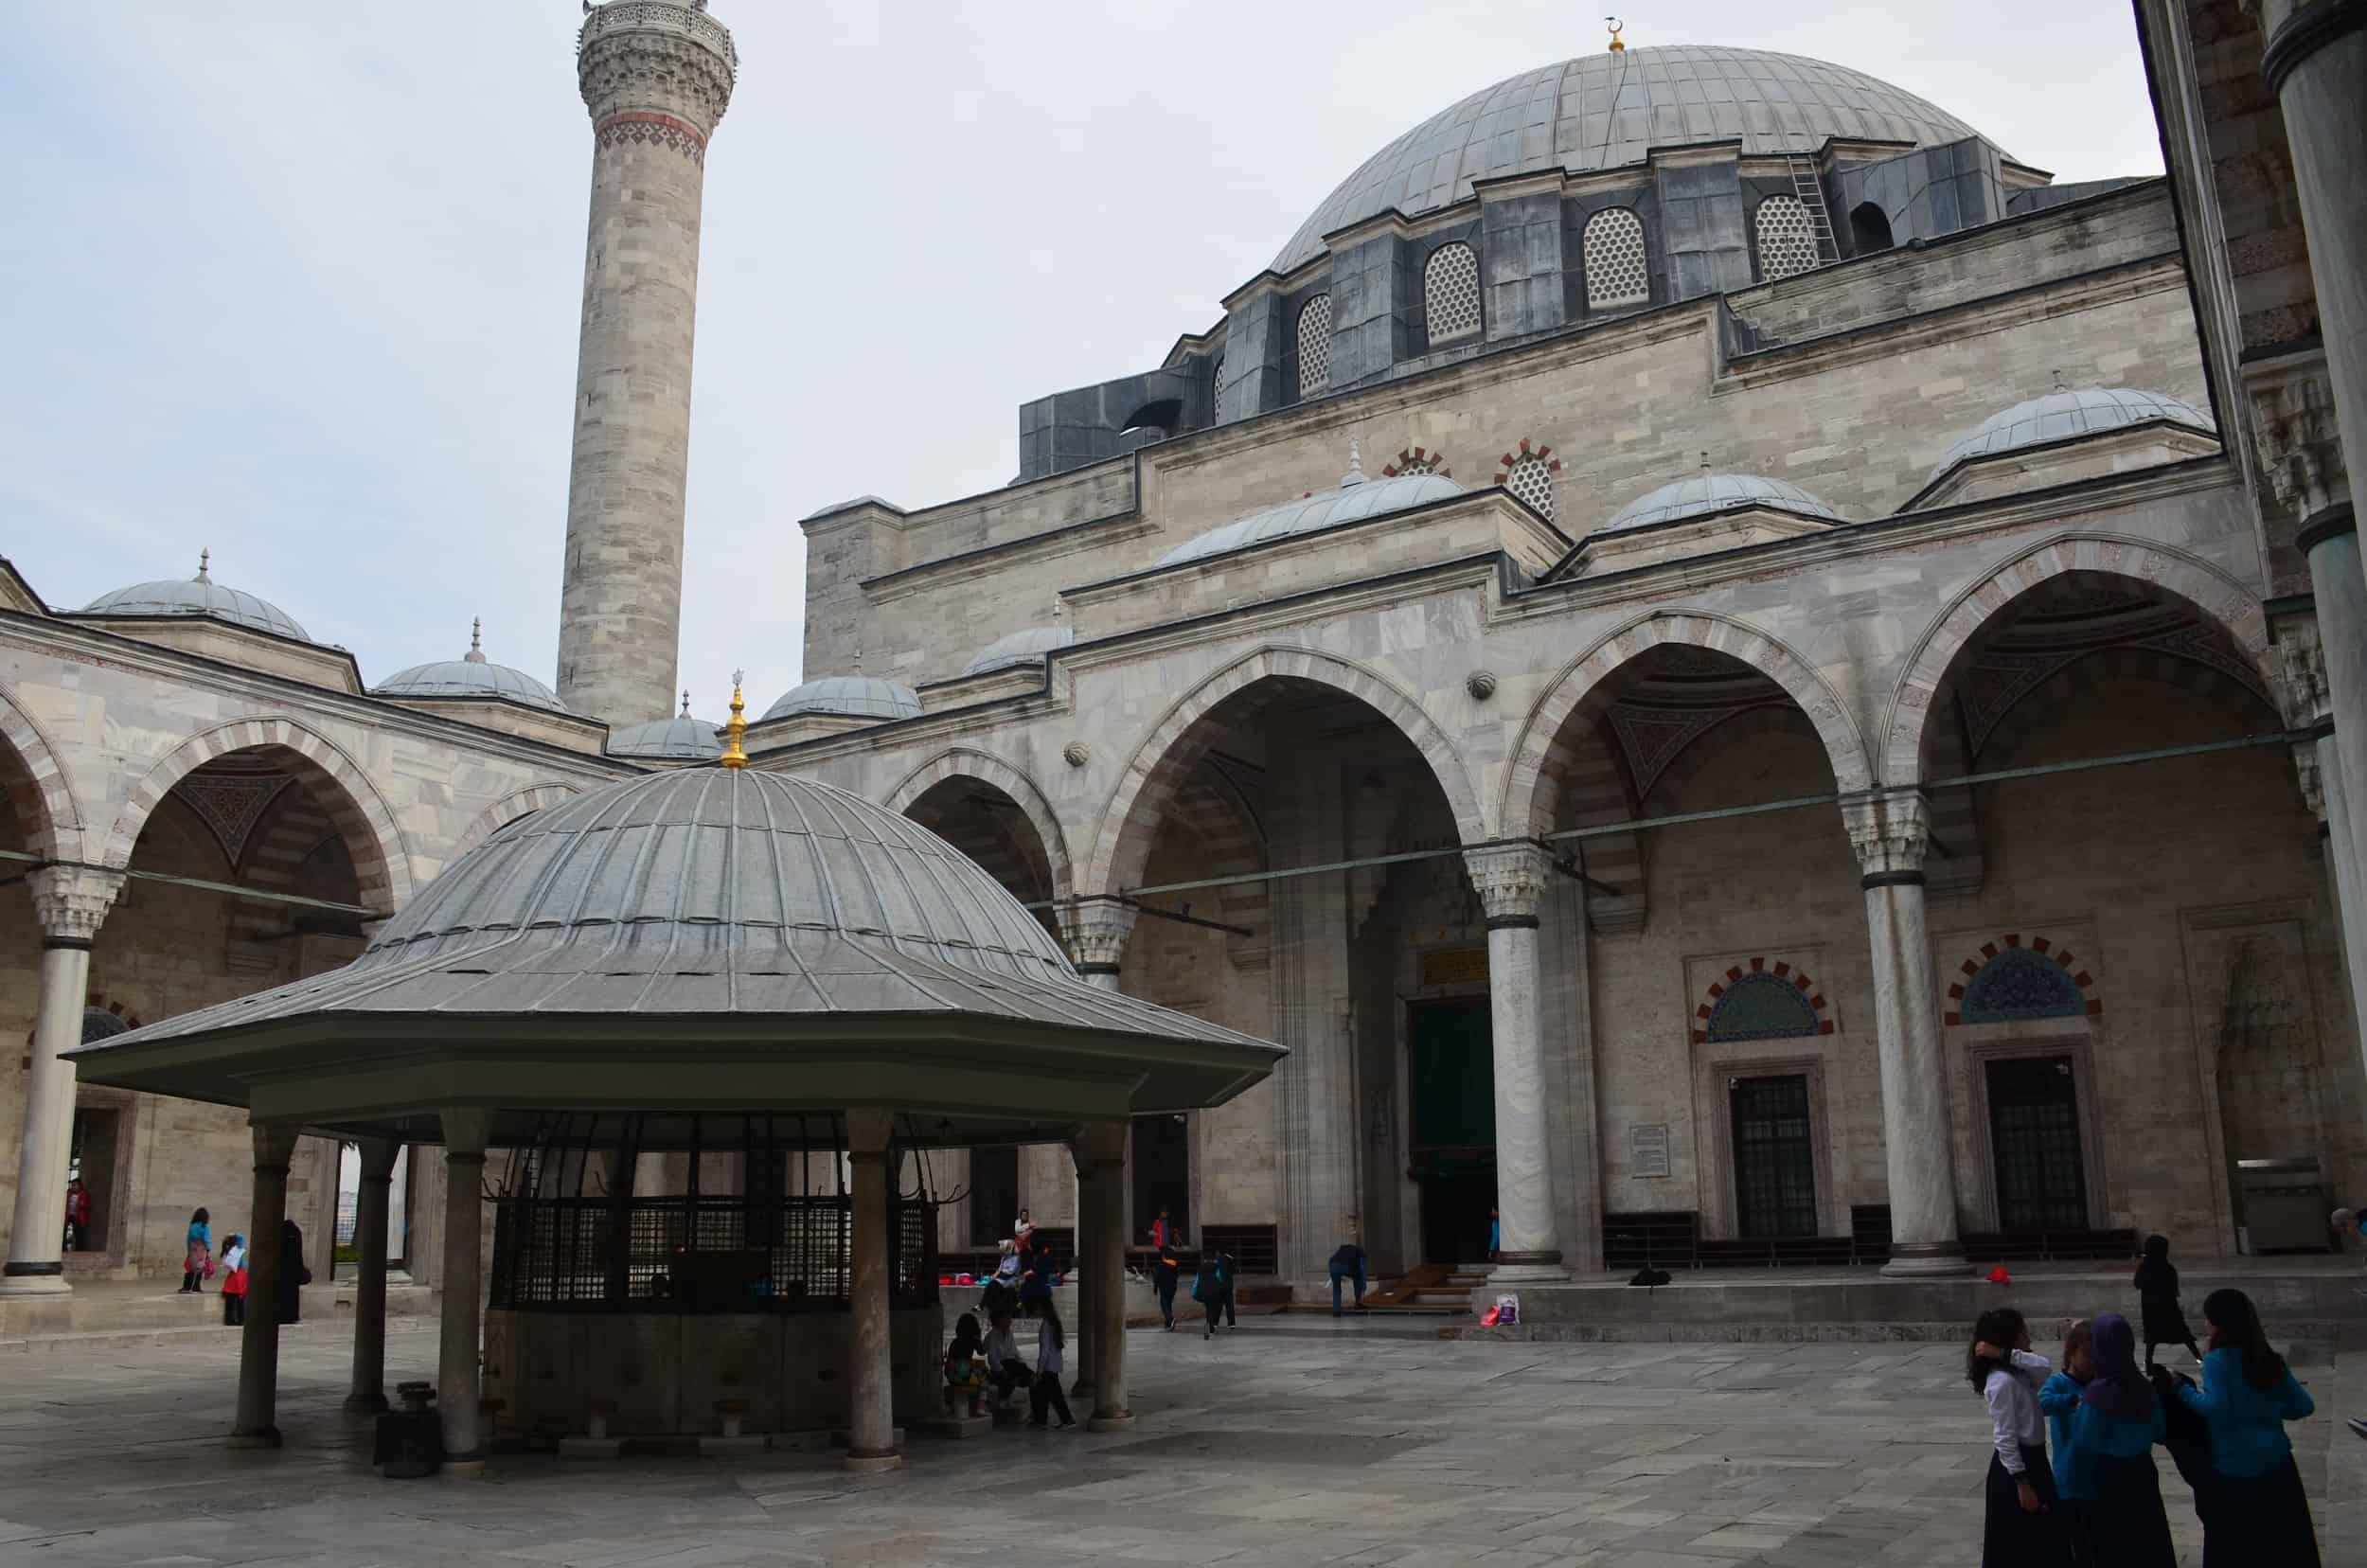 Courtyard at the Yavuz Selim Mosque in Istanbul, Turkey